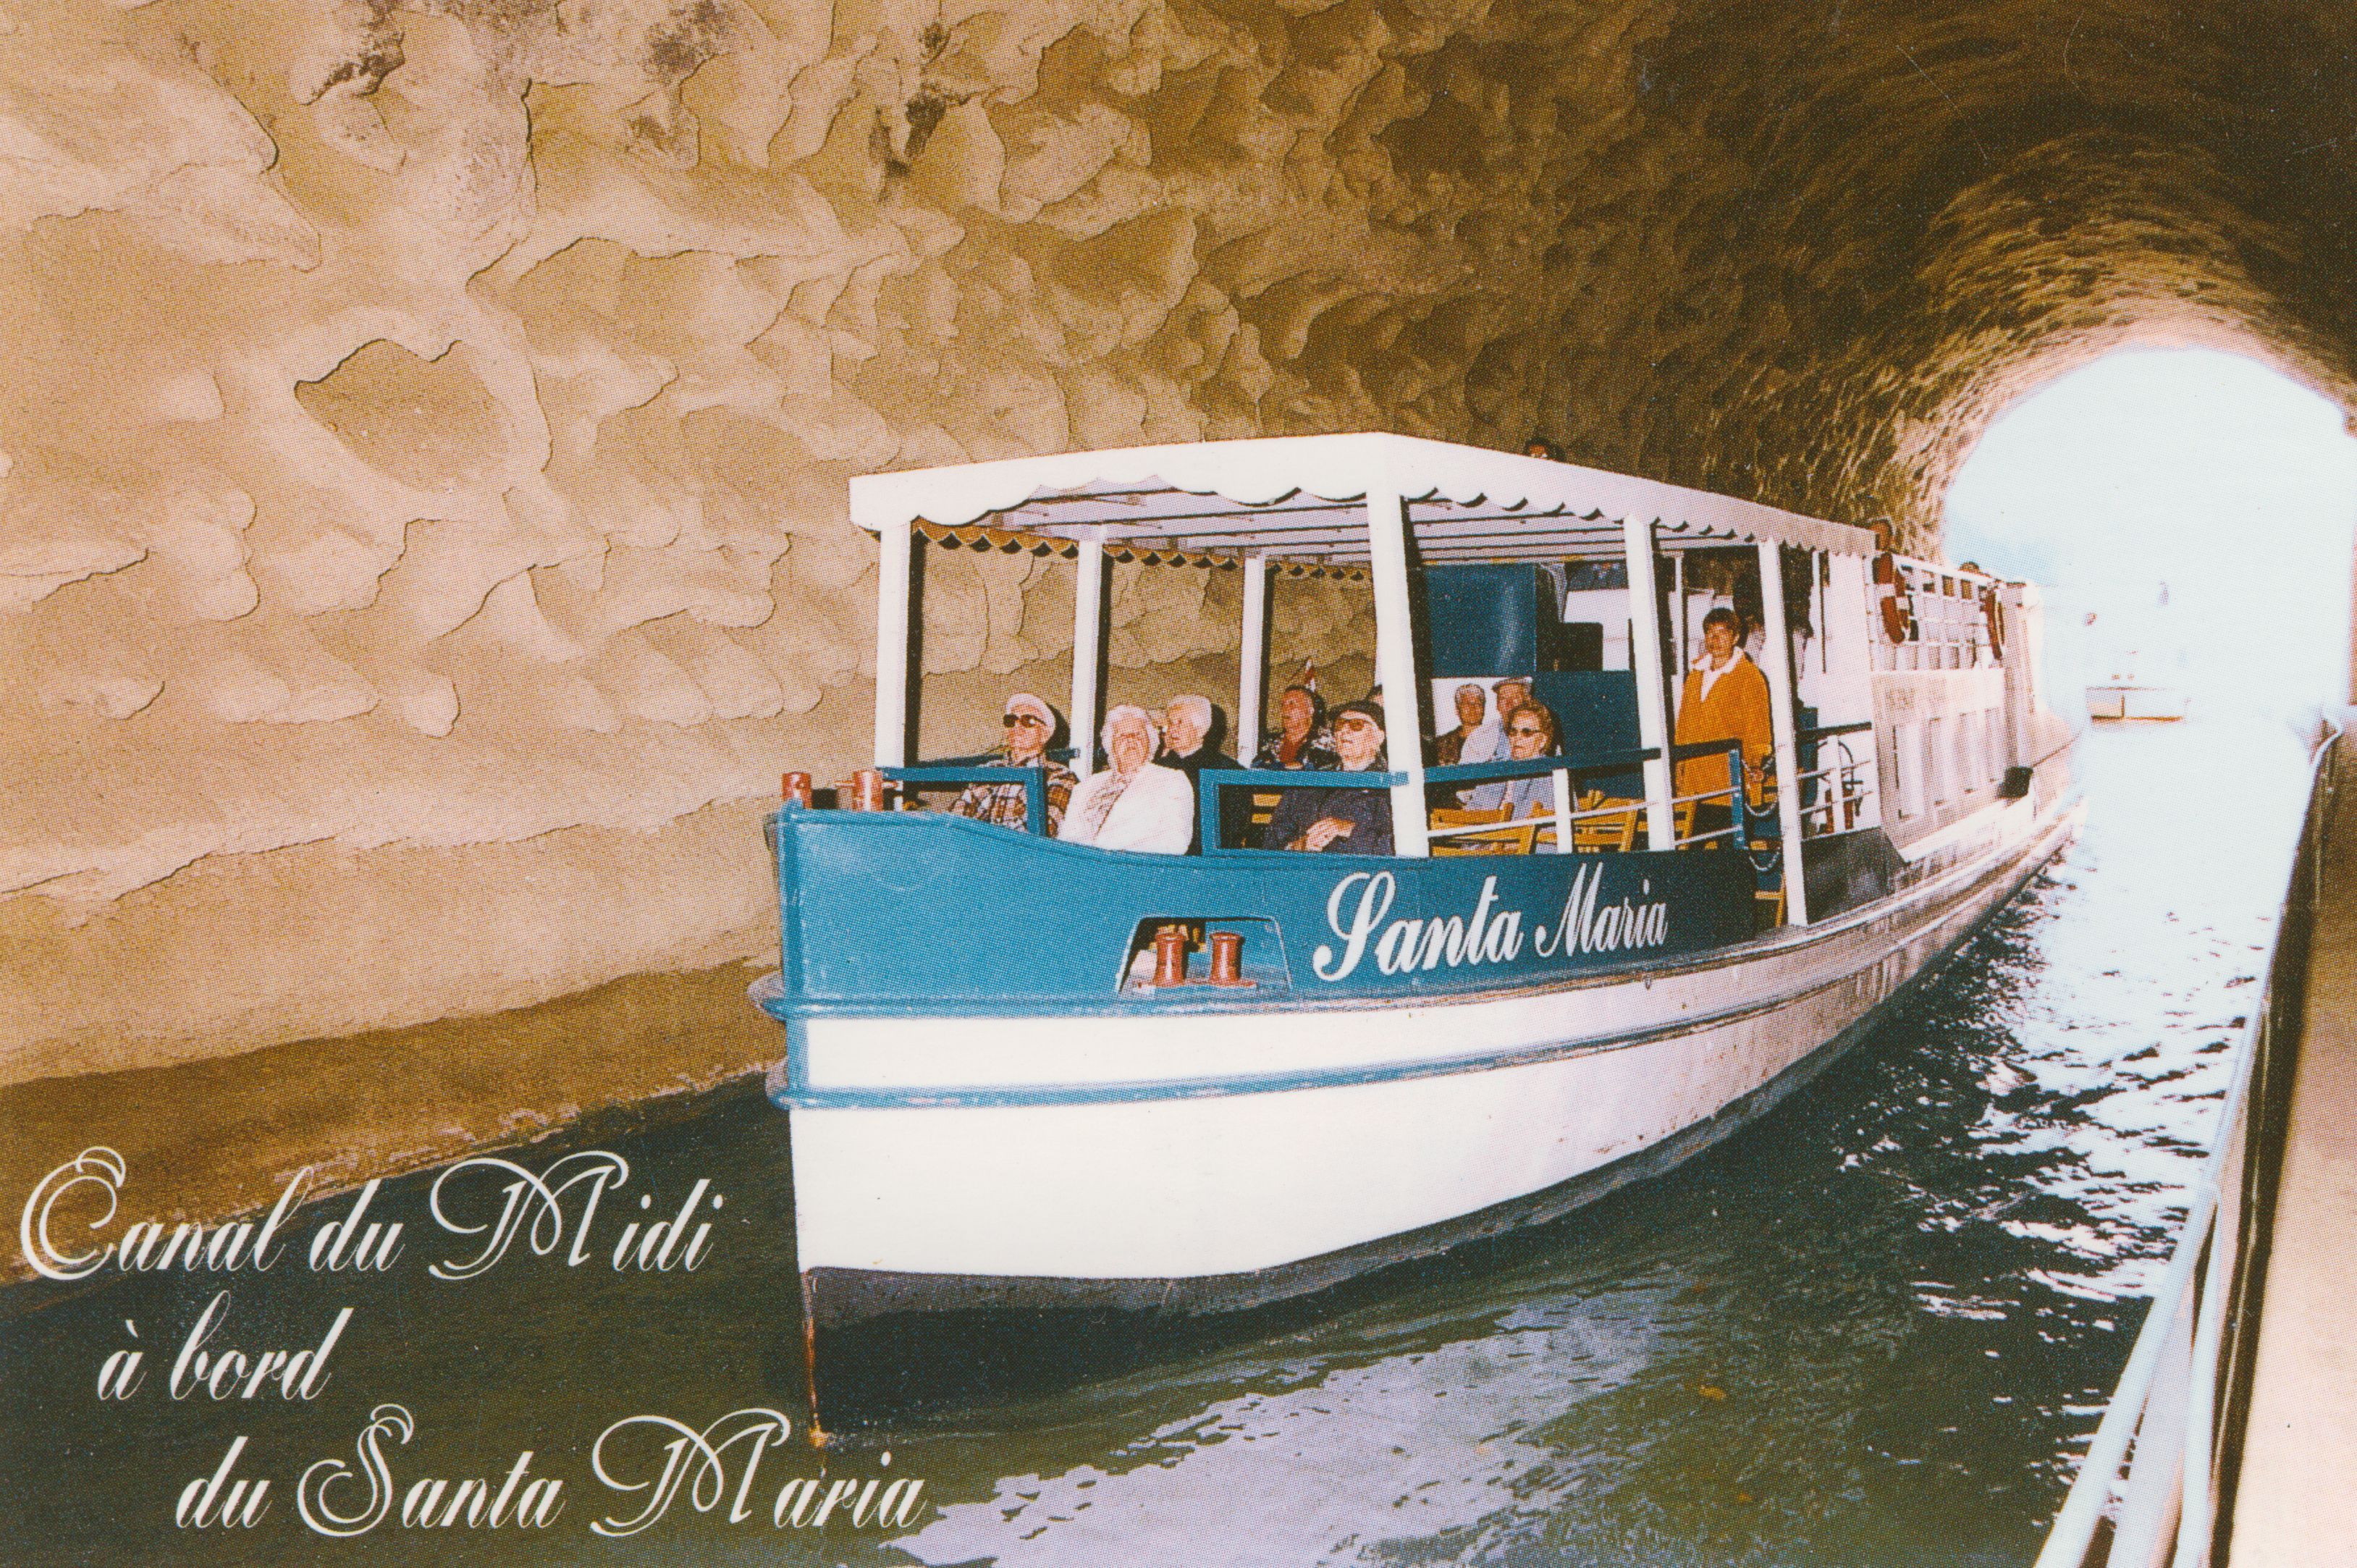 Boats of the Sun - Santa-Maria Malpas Tunnel